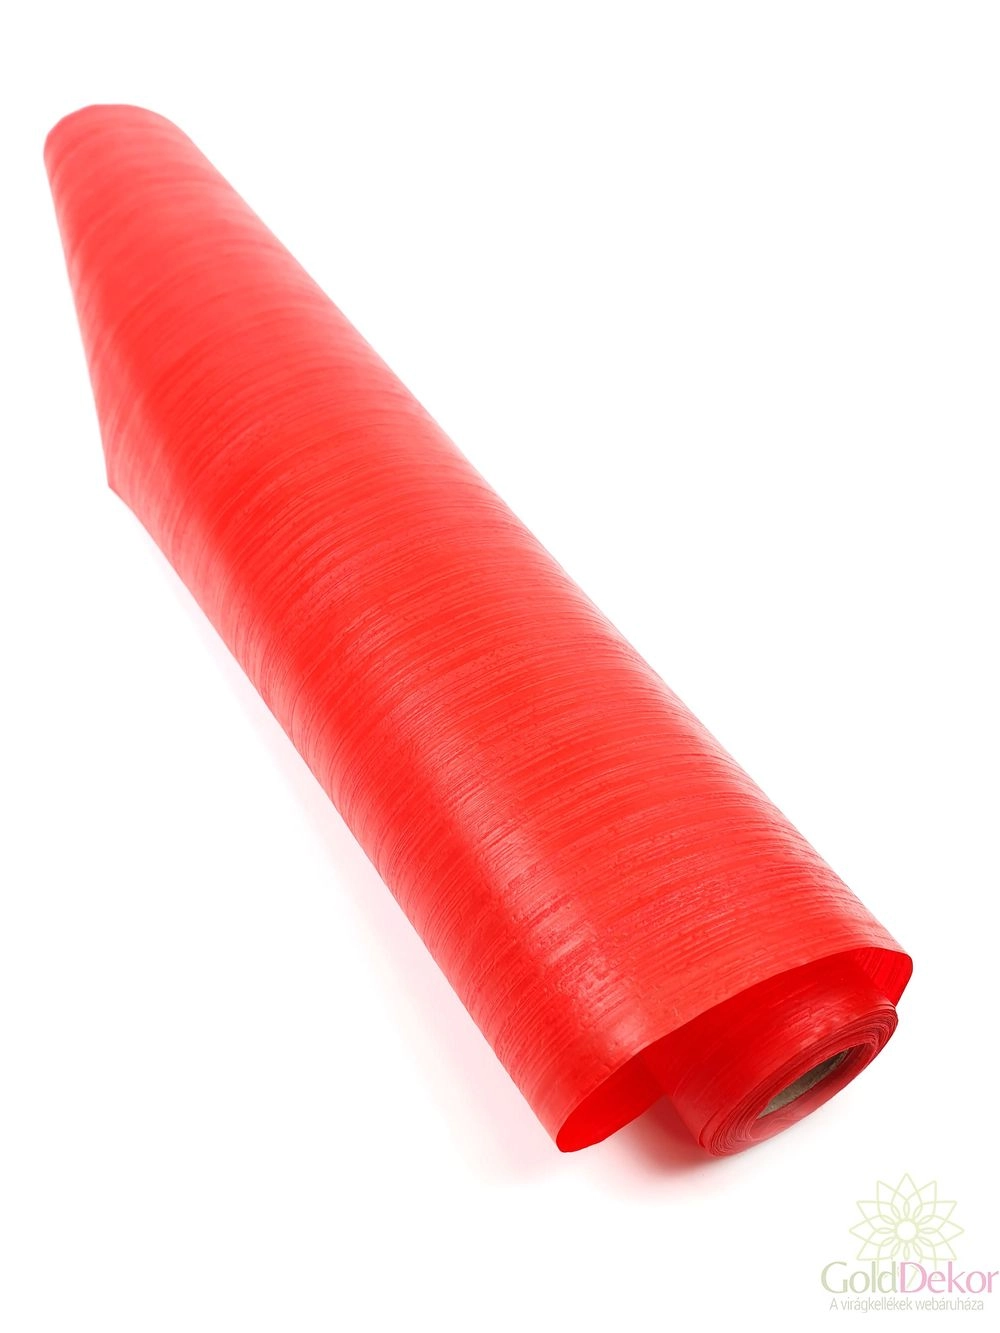 Vízhatlan vetex 5 - Piros